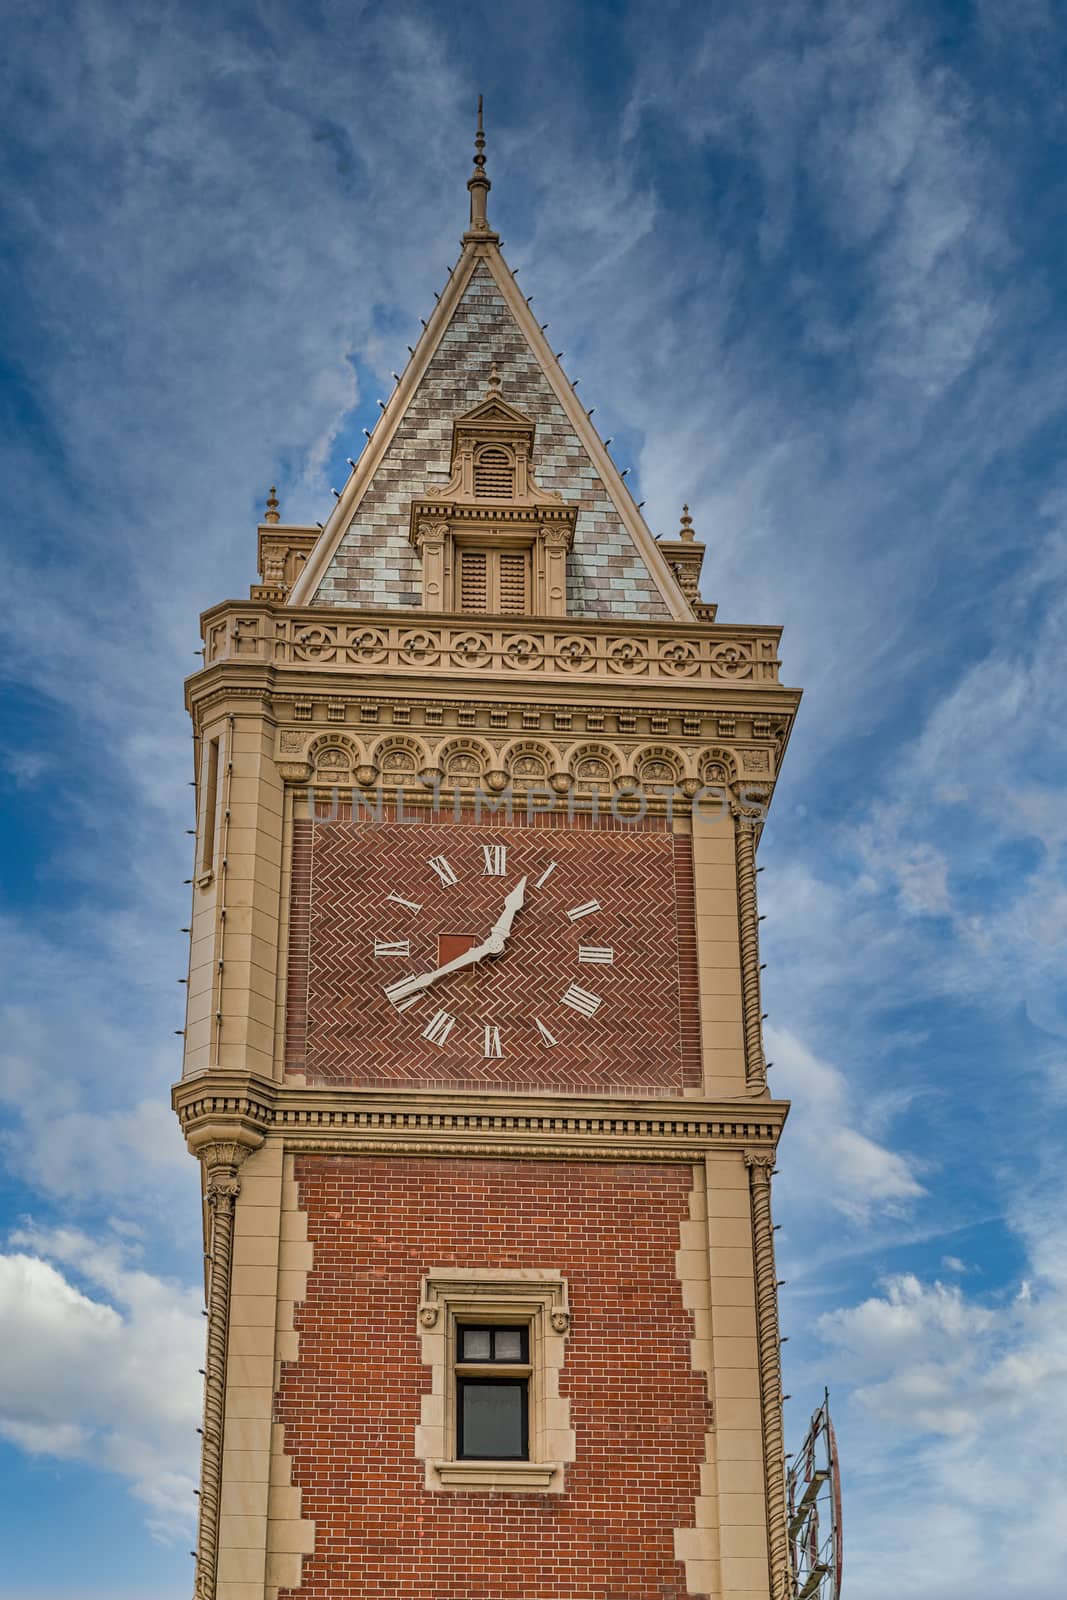 Clock Tower in San Francisco by dbvirago